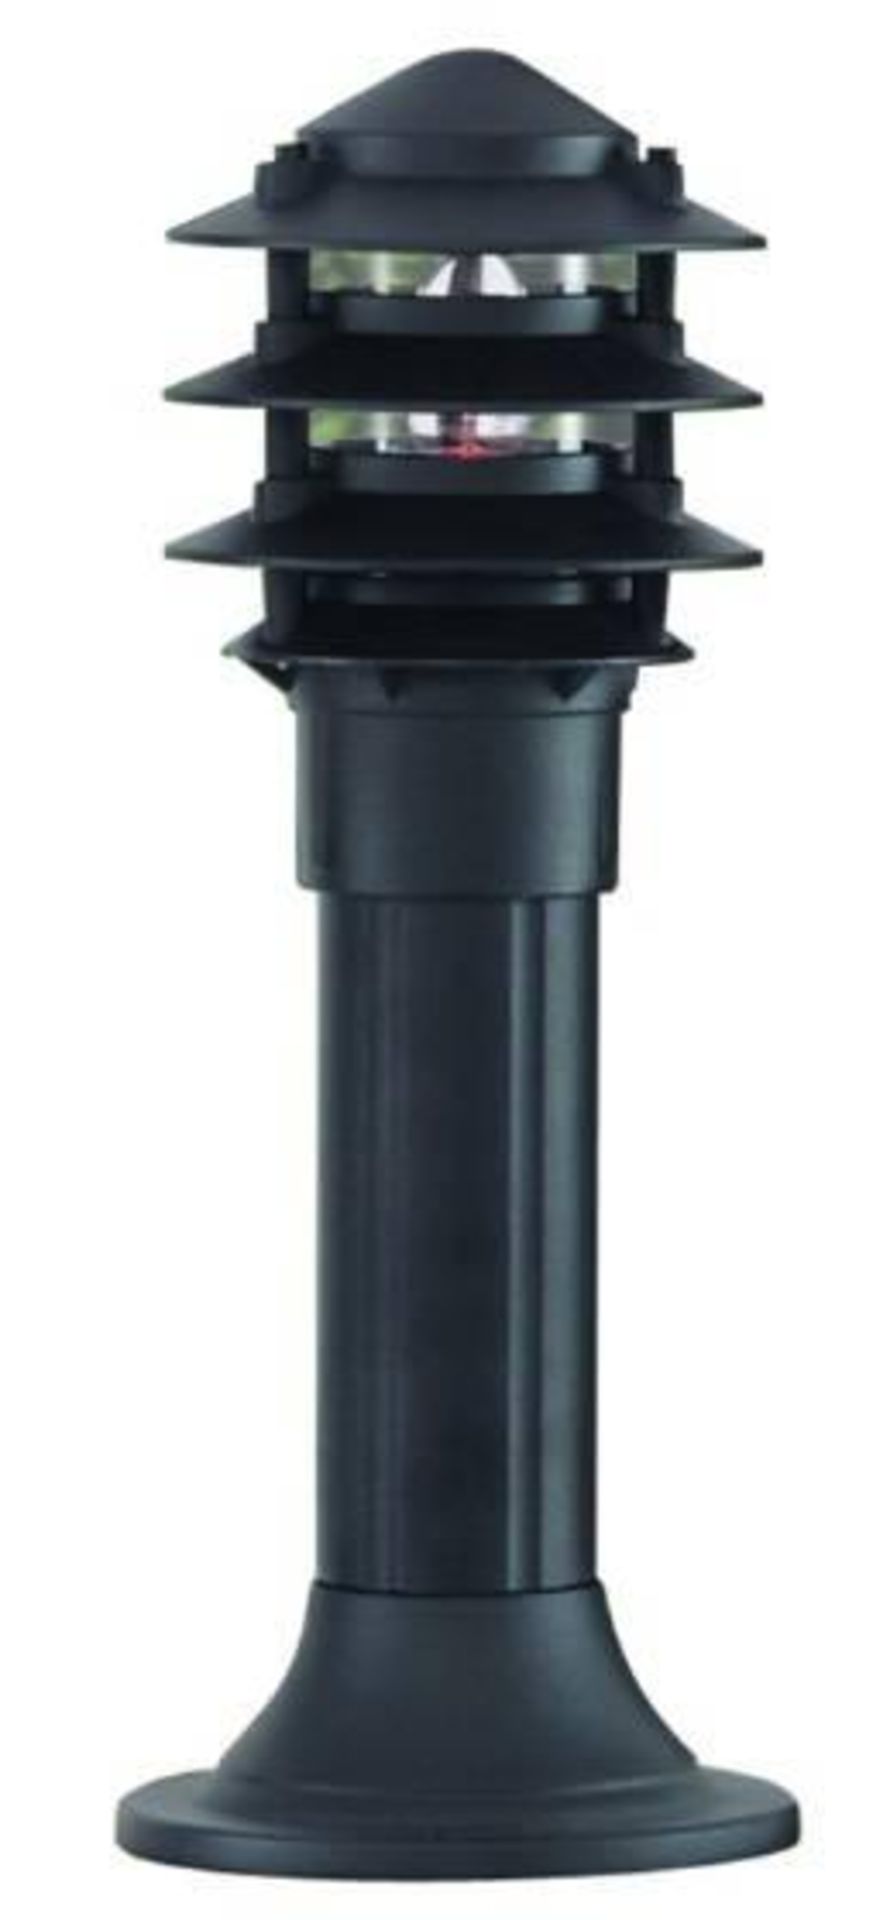 1 x Die Cast Aluminium IP44 Black Bollard Light With Glass Diffuser Height 45cm x 15cm Diameter - Image 2 of 2